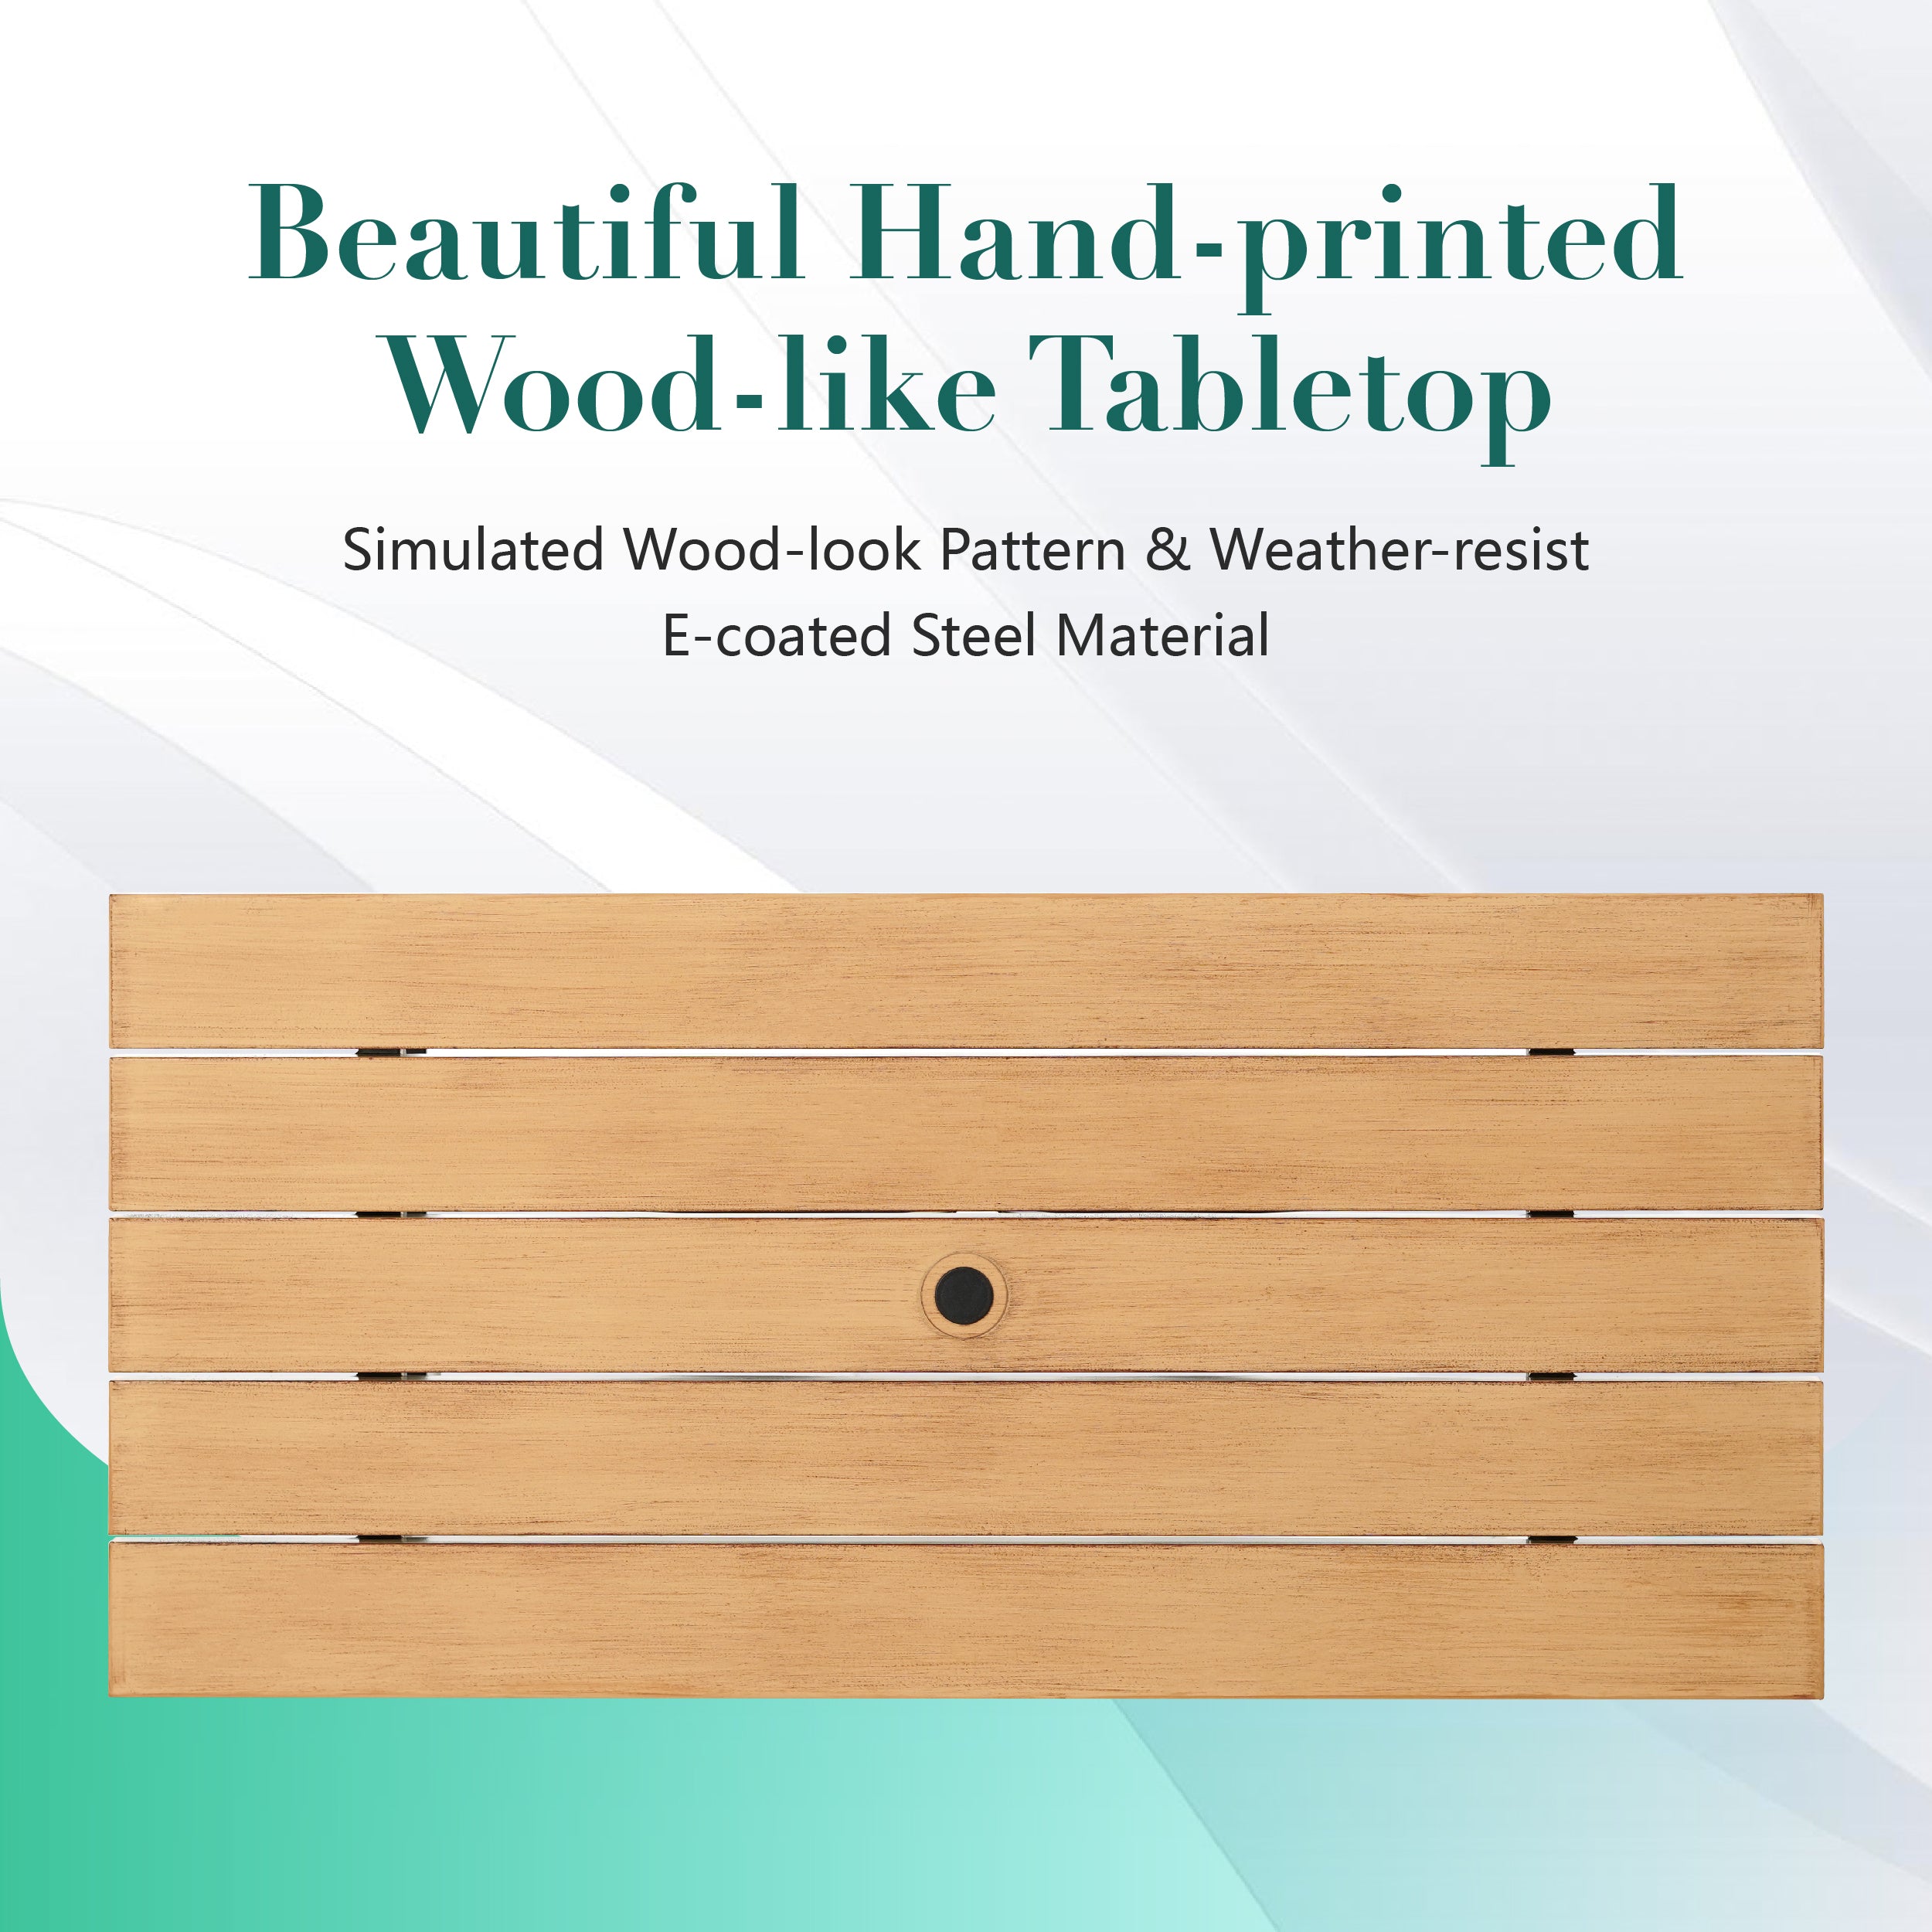 MFSTUDIO 5-Piece Patio Bar Stool Set Wood-grain Bar Table & Aqua Textilene Swivel Stools